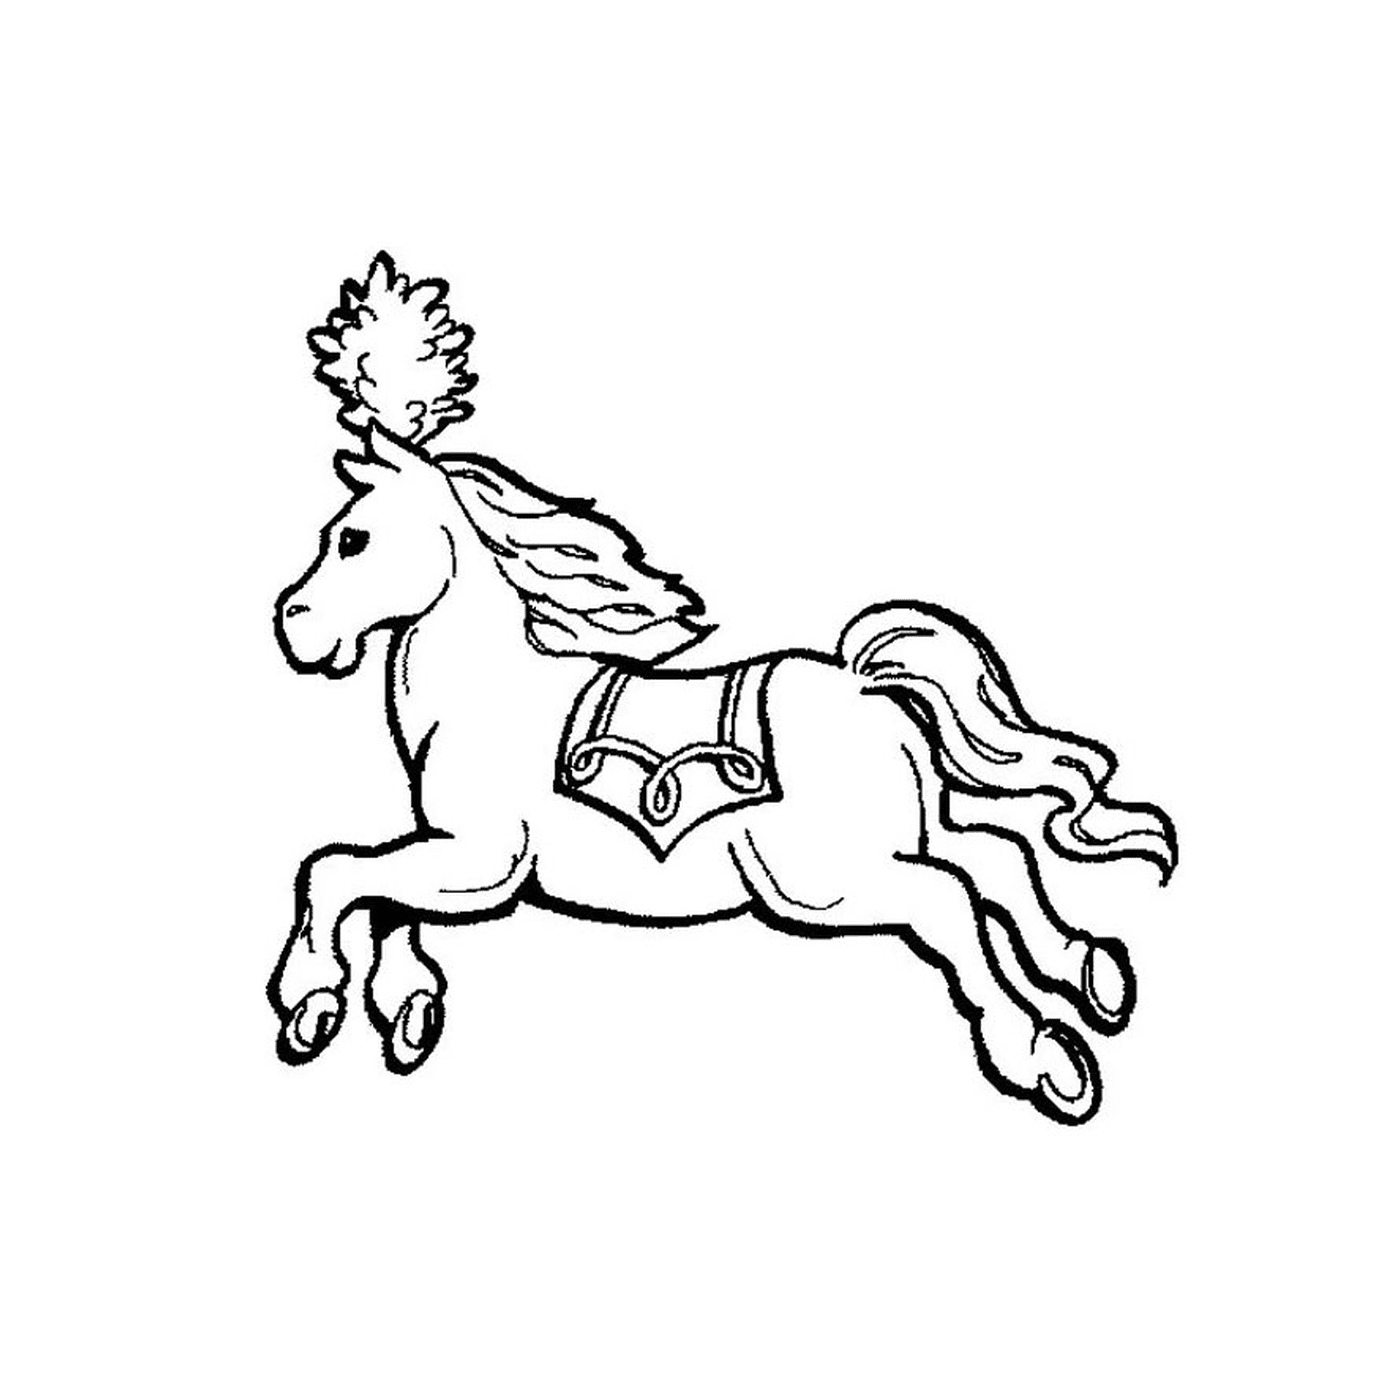  Лошадь с жгутом на спине 